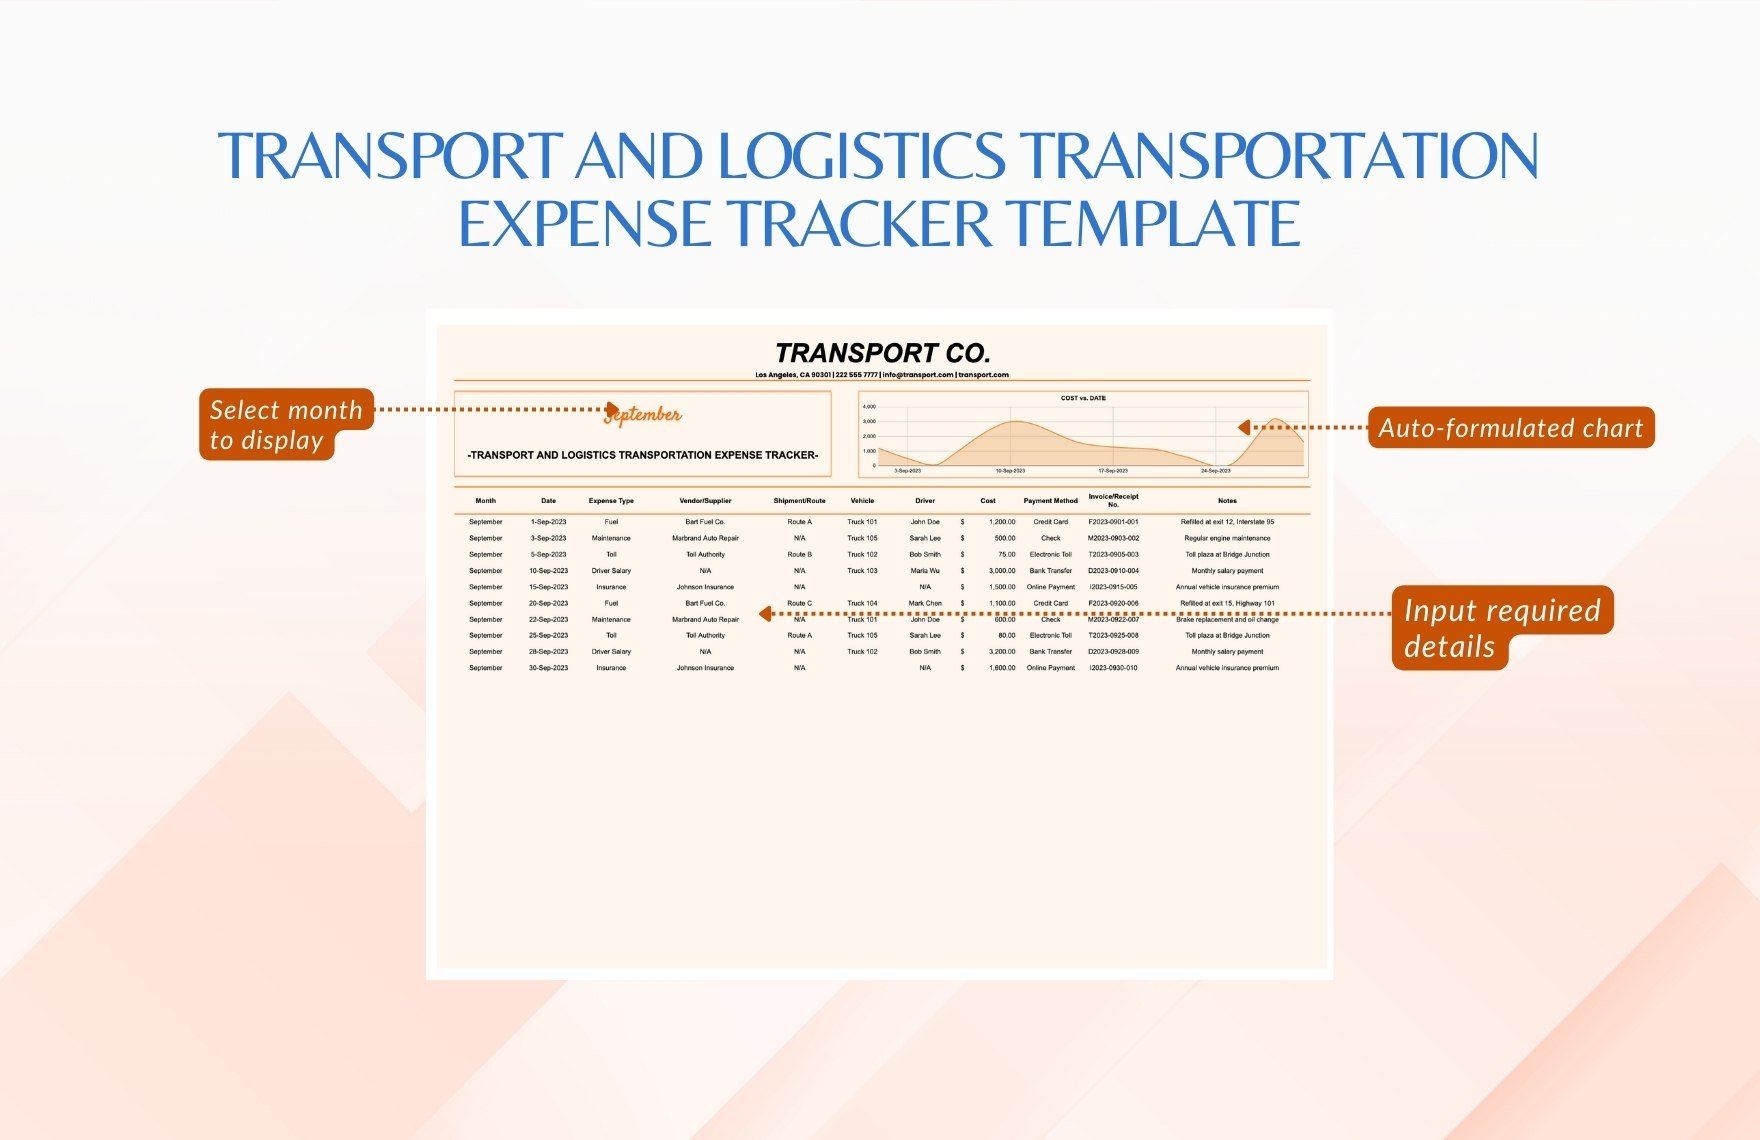 Transport and Logistics Transportation Expense Tracker Template